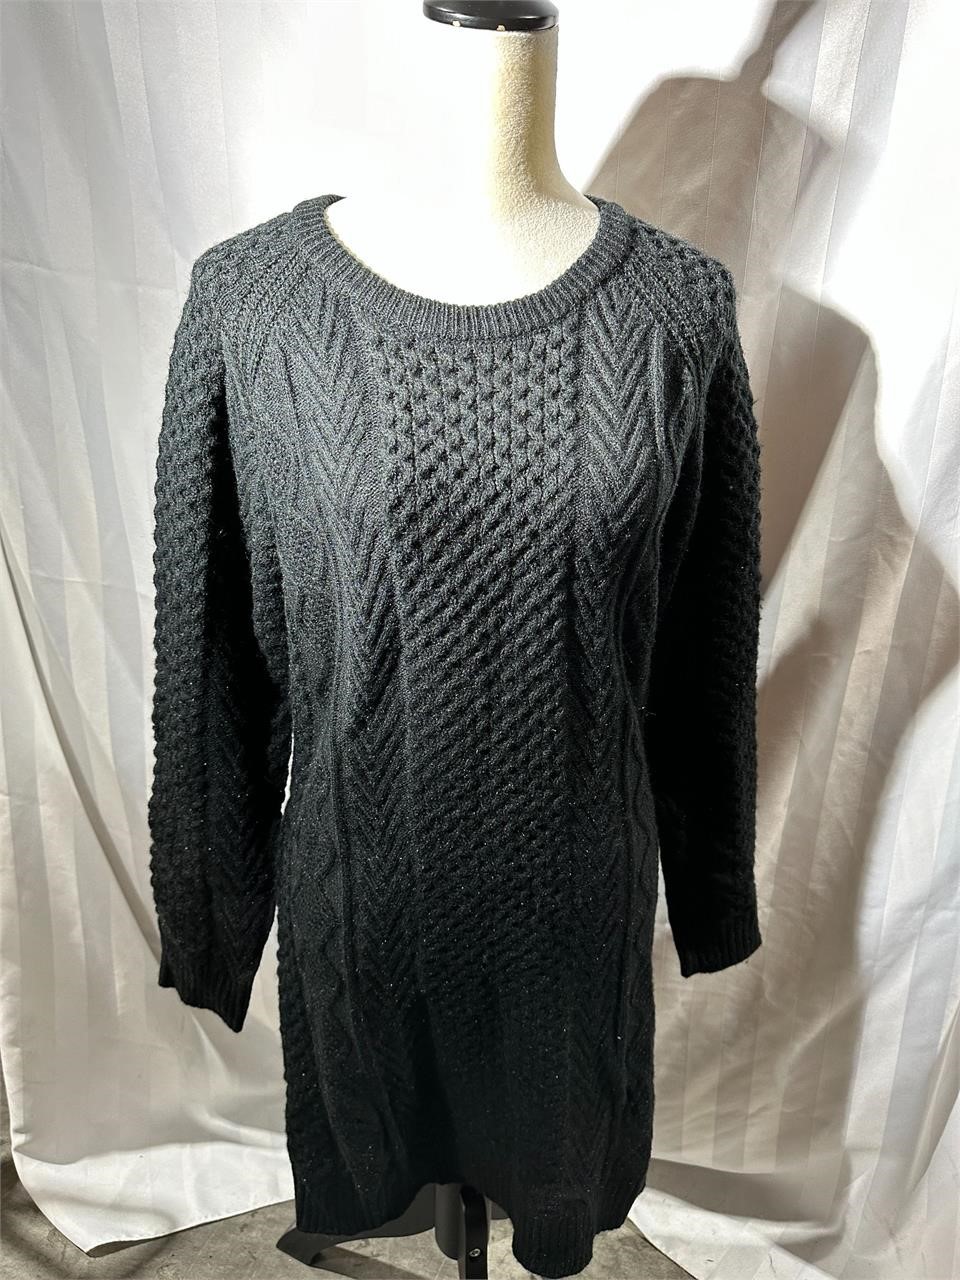 Leyden new Sweater Dress sz Lrg msrp $108